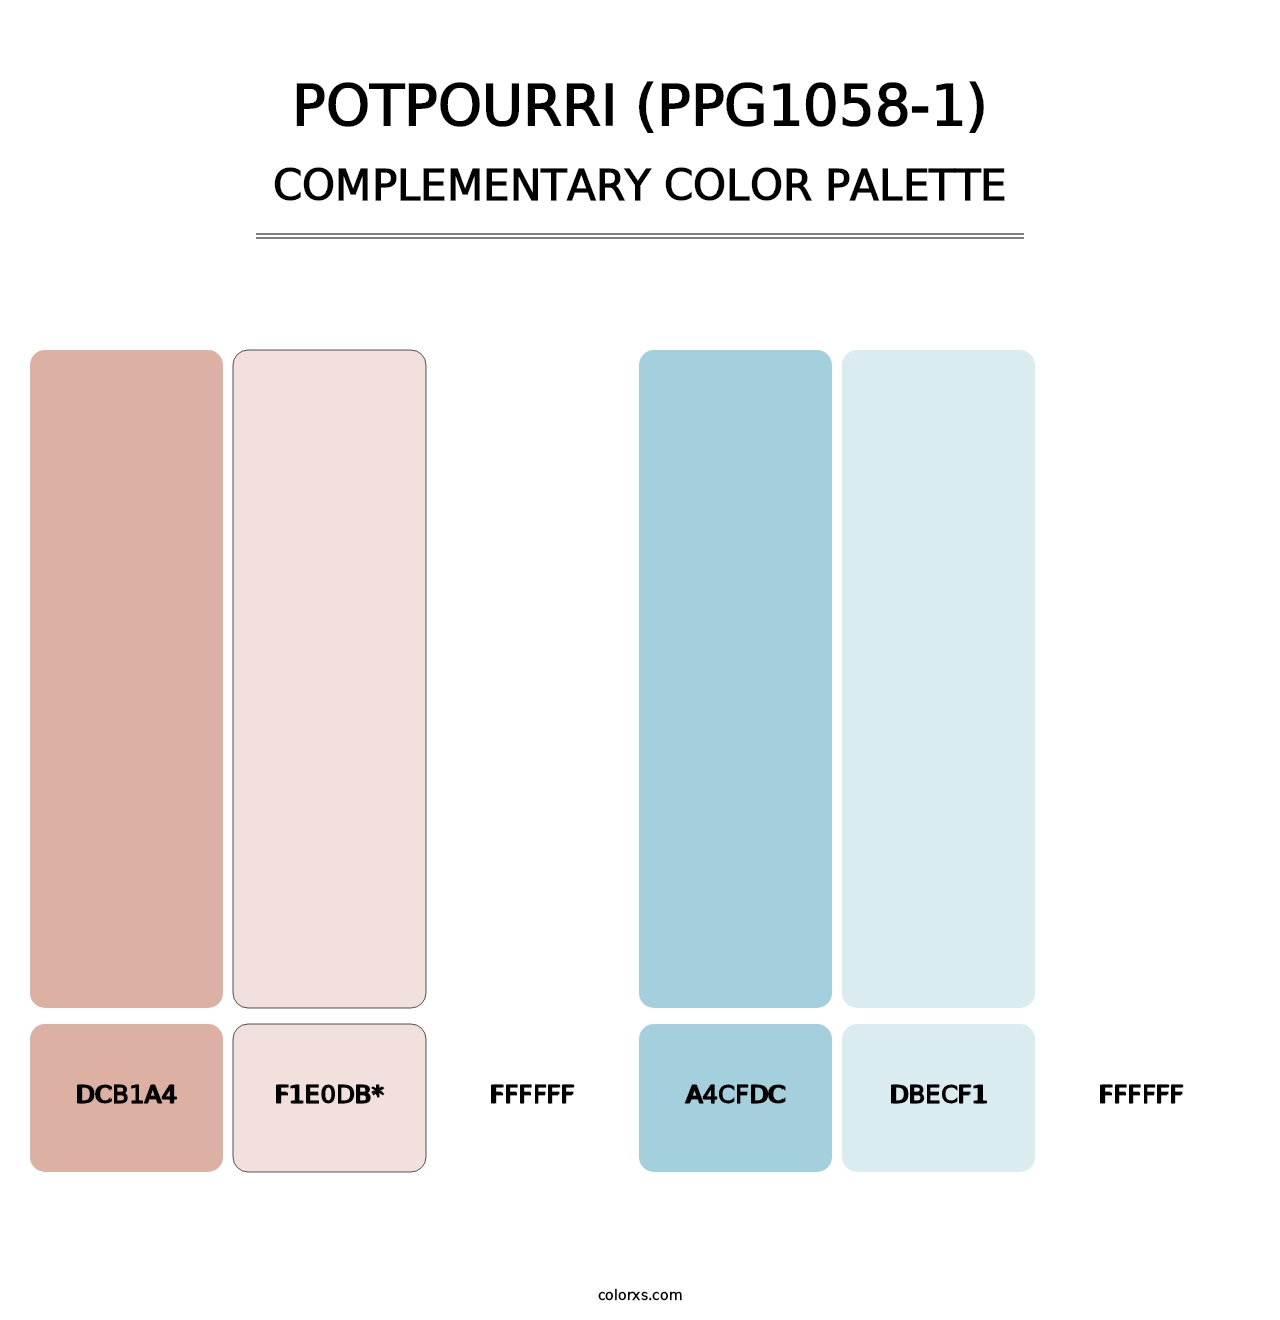 Potpourri (PPG1058-1) - Complementary Color Palette